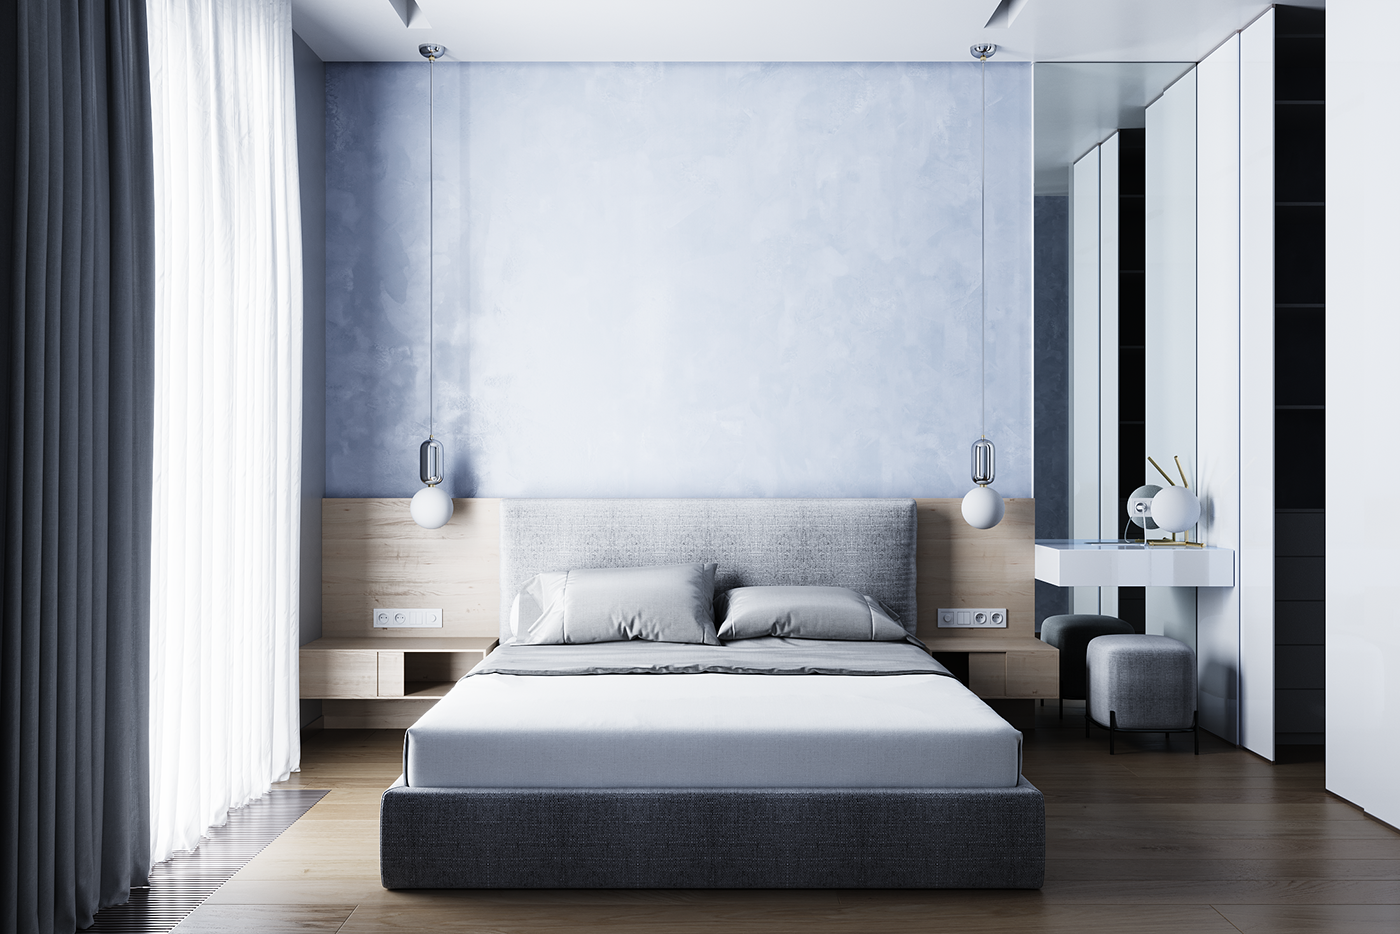 bedroom minimalist Interior bedrooomdesign минимализм спальня дизайн спальни современный contemporary bedroom design